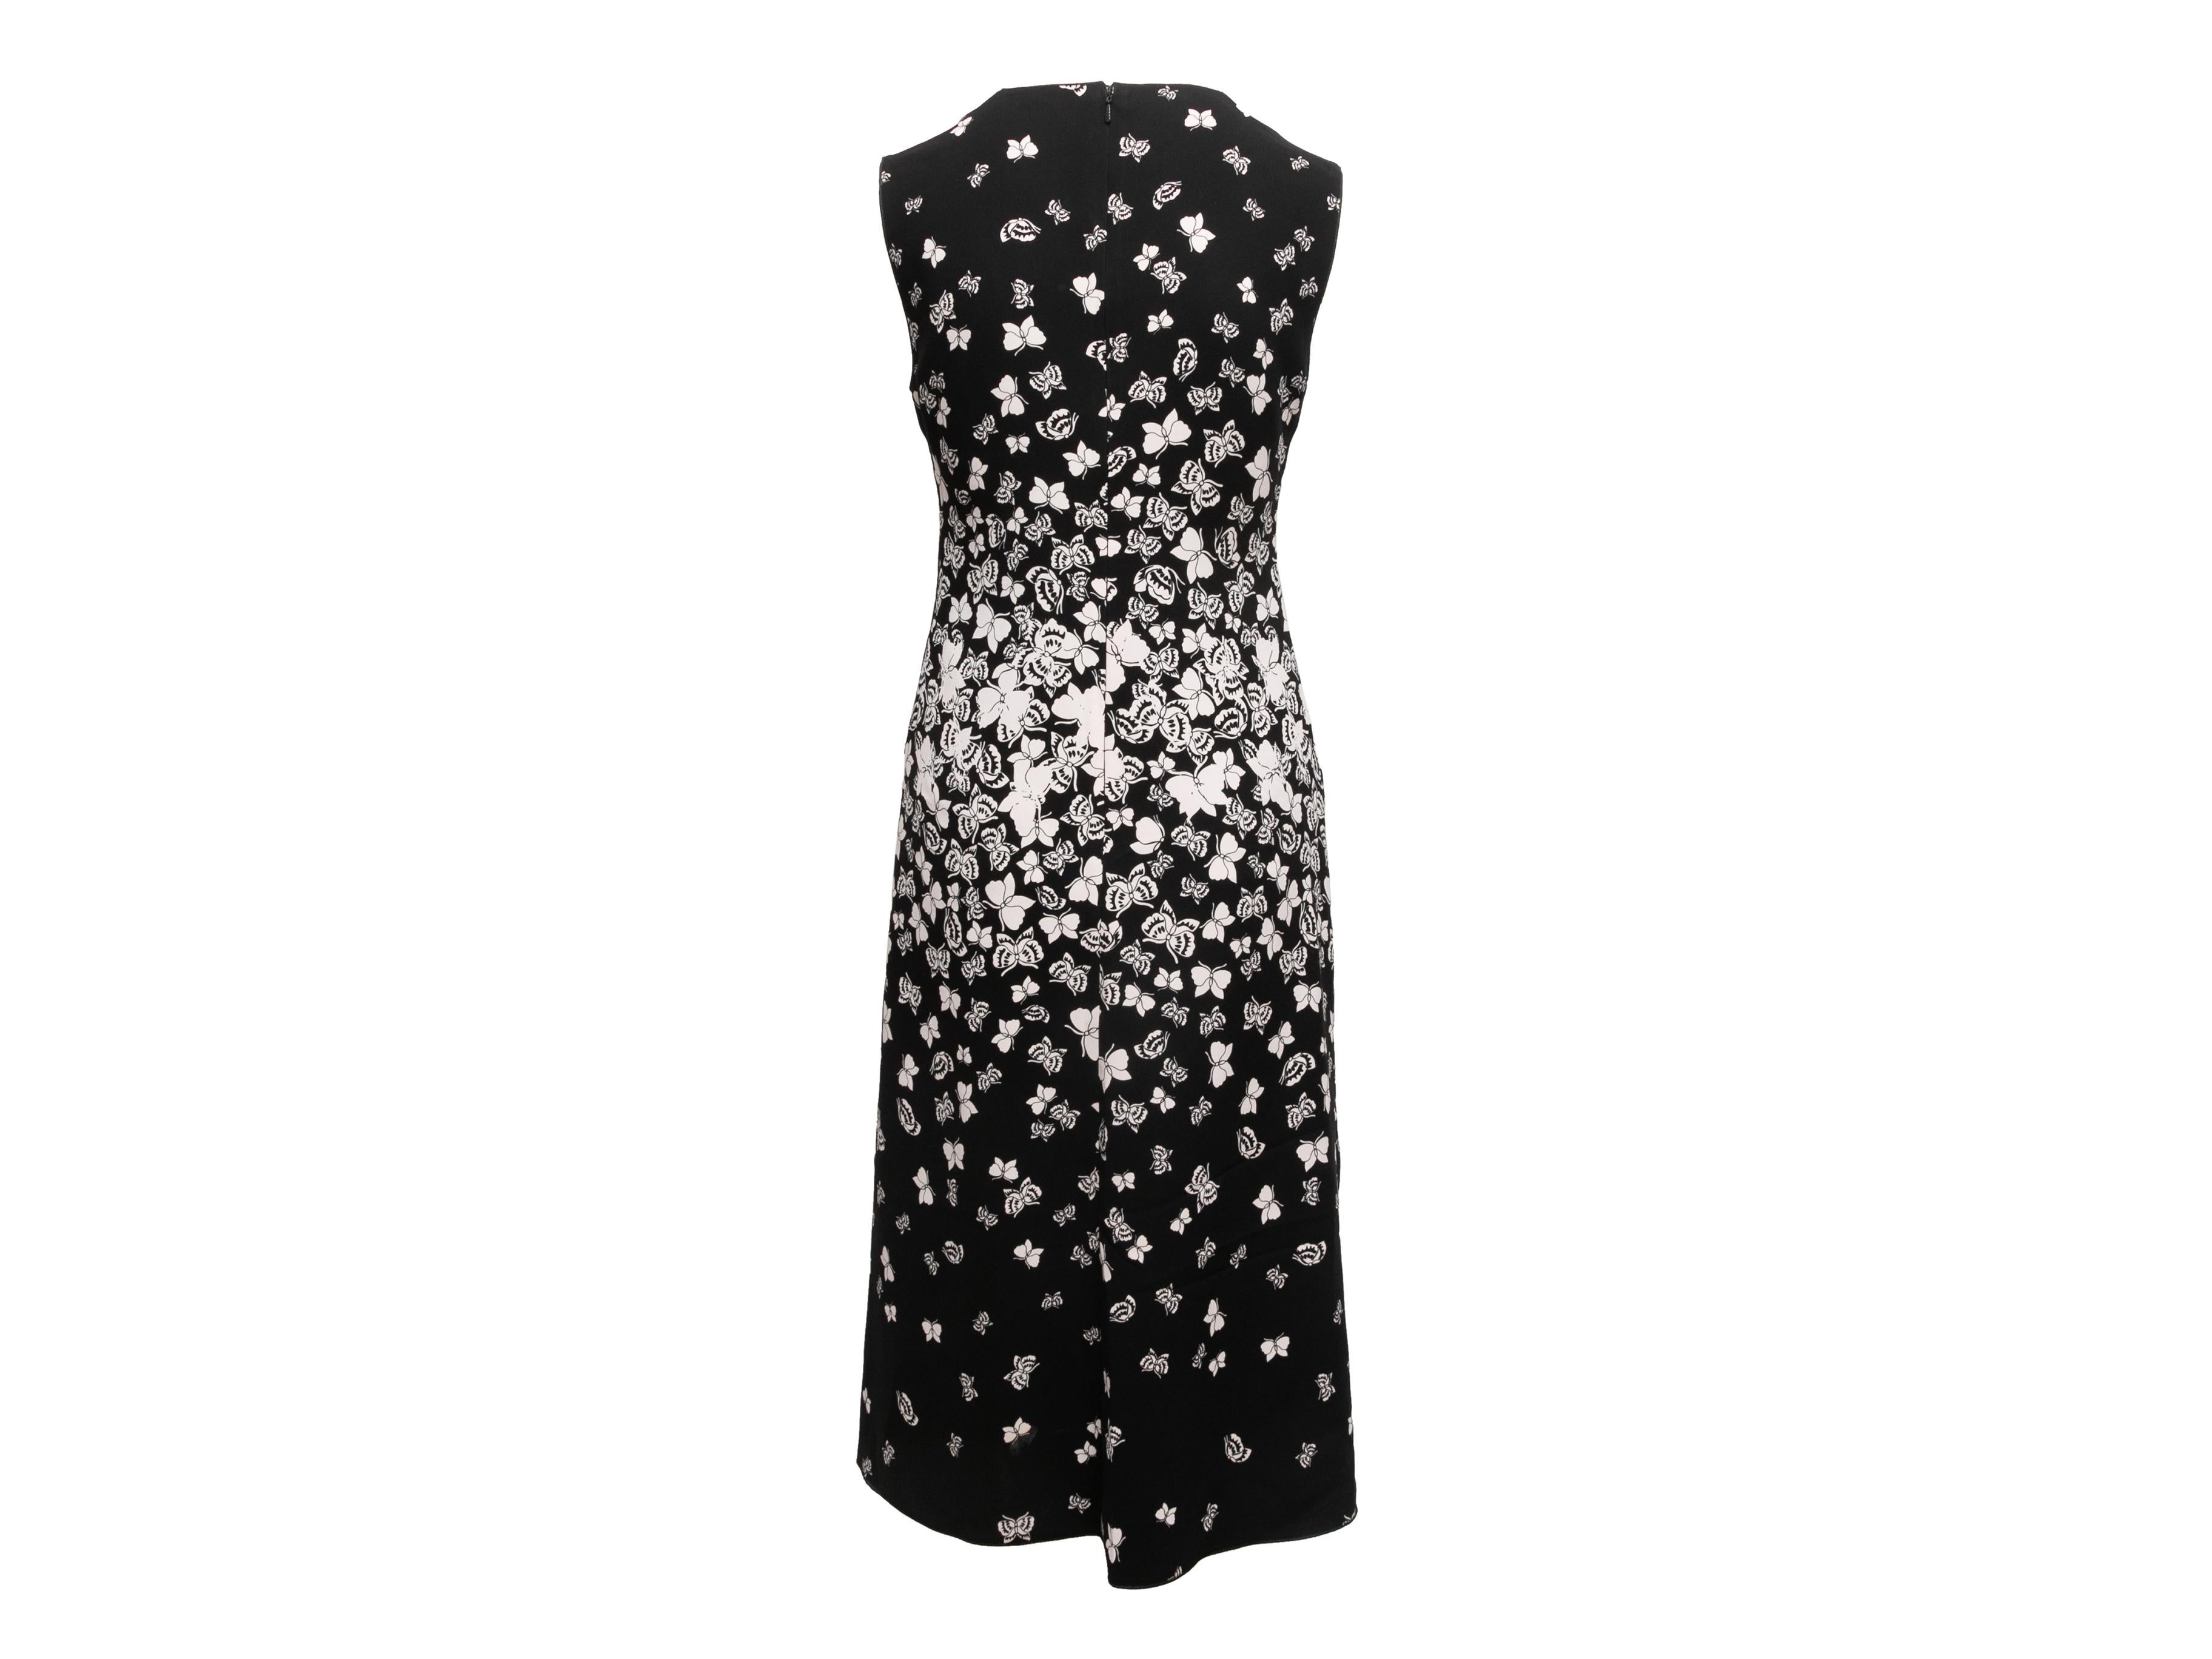 Black & White Bottega Veneta Butterfly Print Dress Size EU 42 In Good Condition For Sale In New York, NY